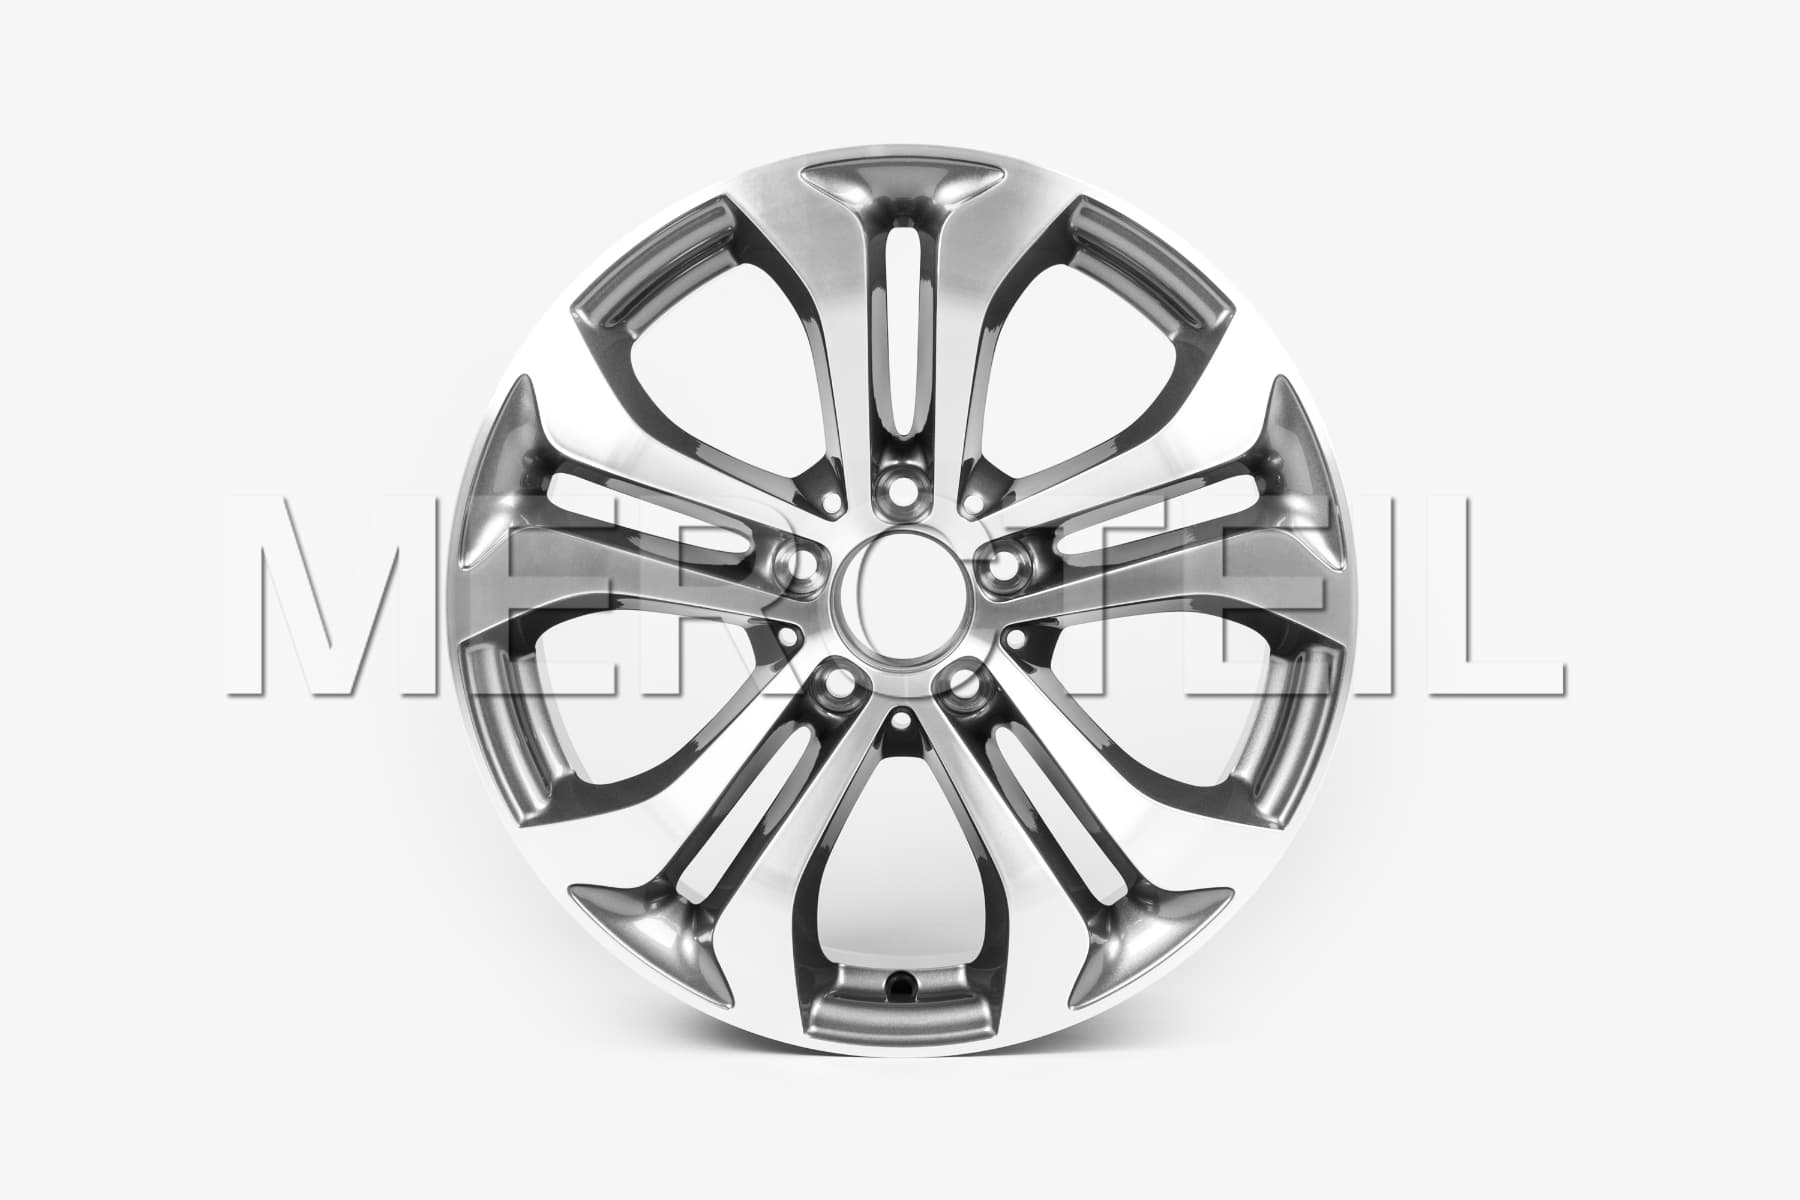 GLC-Class Wheels Set 5 Twin Spoke Design X253 C253 Genuine Mercedes-Benz (Part number: A25340106007X44)